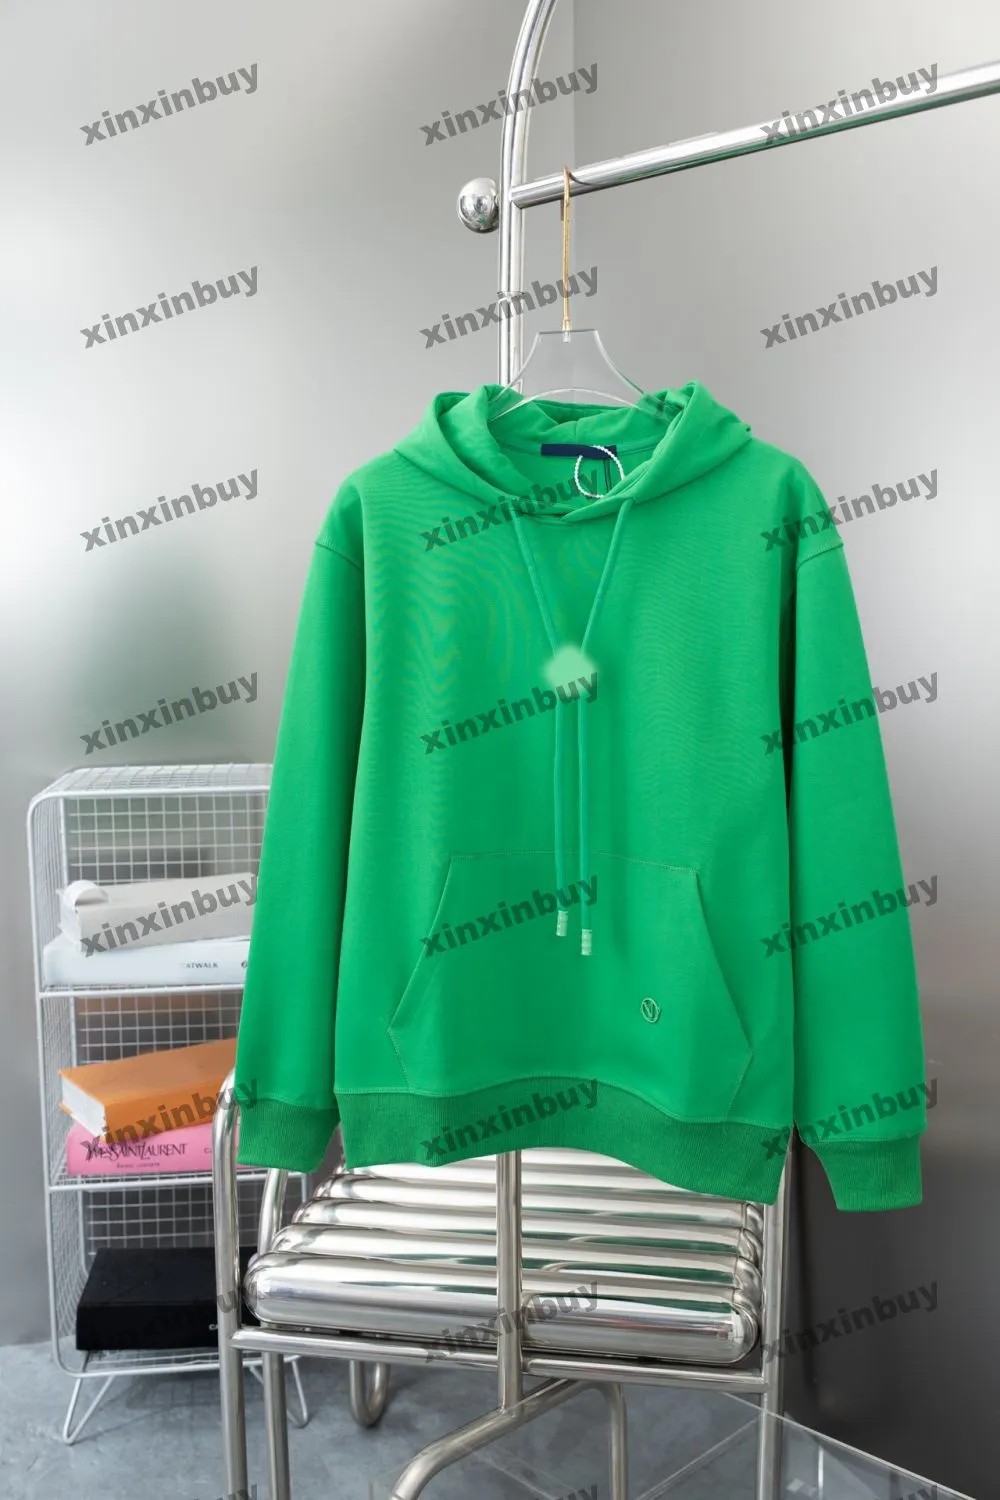 xinxinbuy Men designer Tee t shirt 23ss Paris Floral pattern Button long sleeve cotton women green Black khaki S-2XL